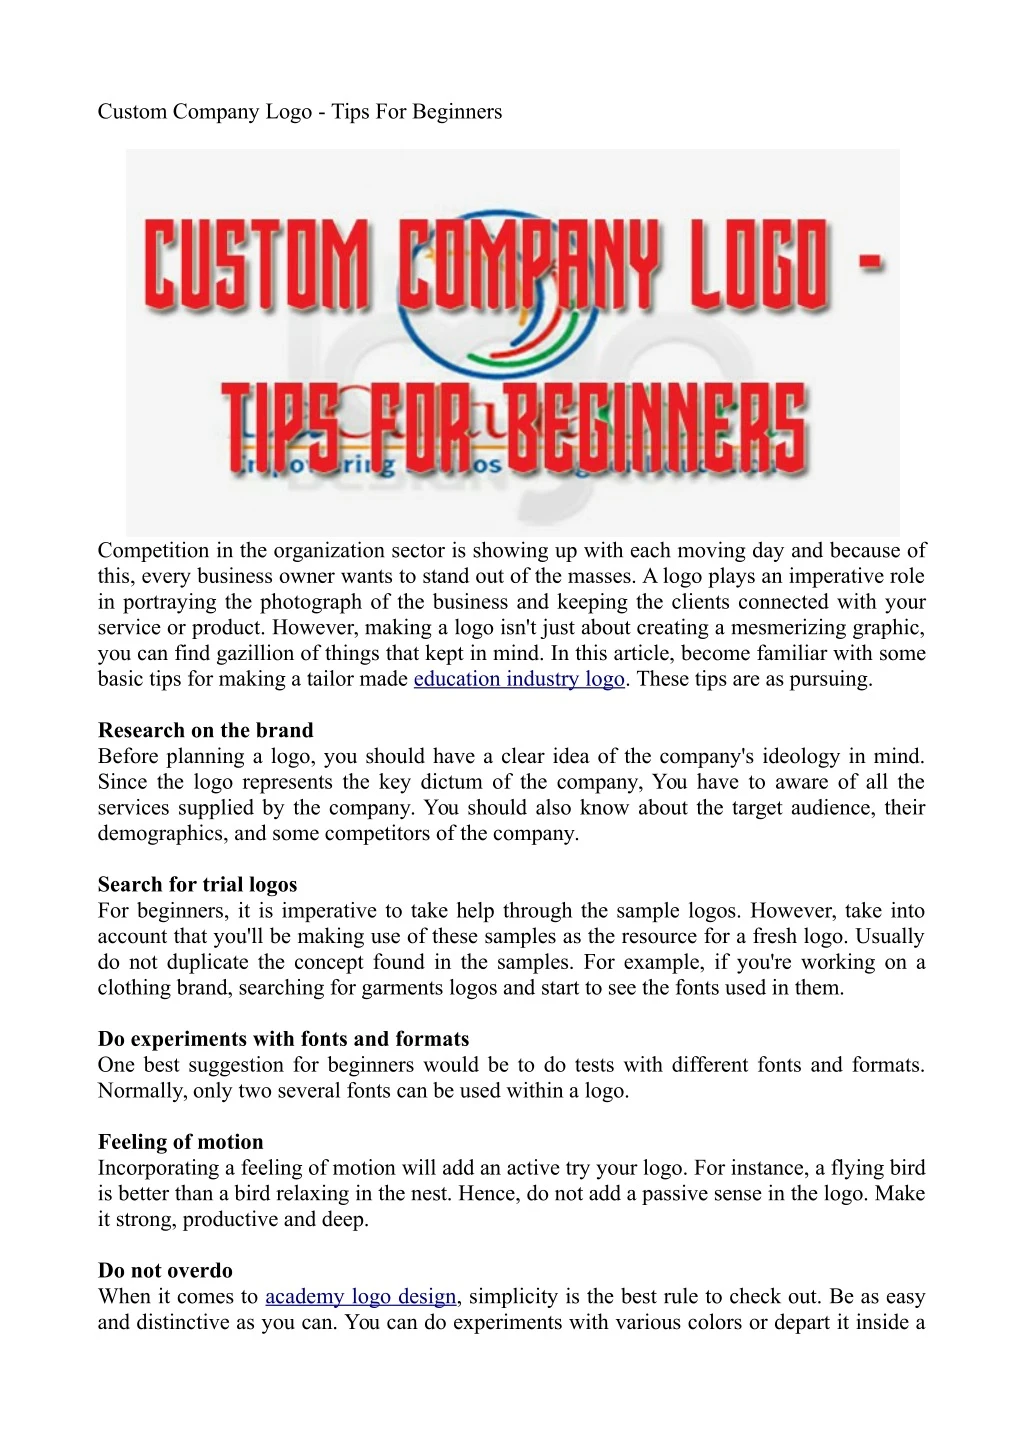 custom company logo tips for beginners